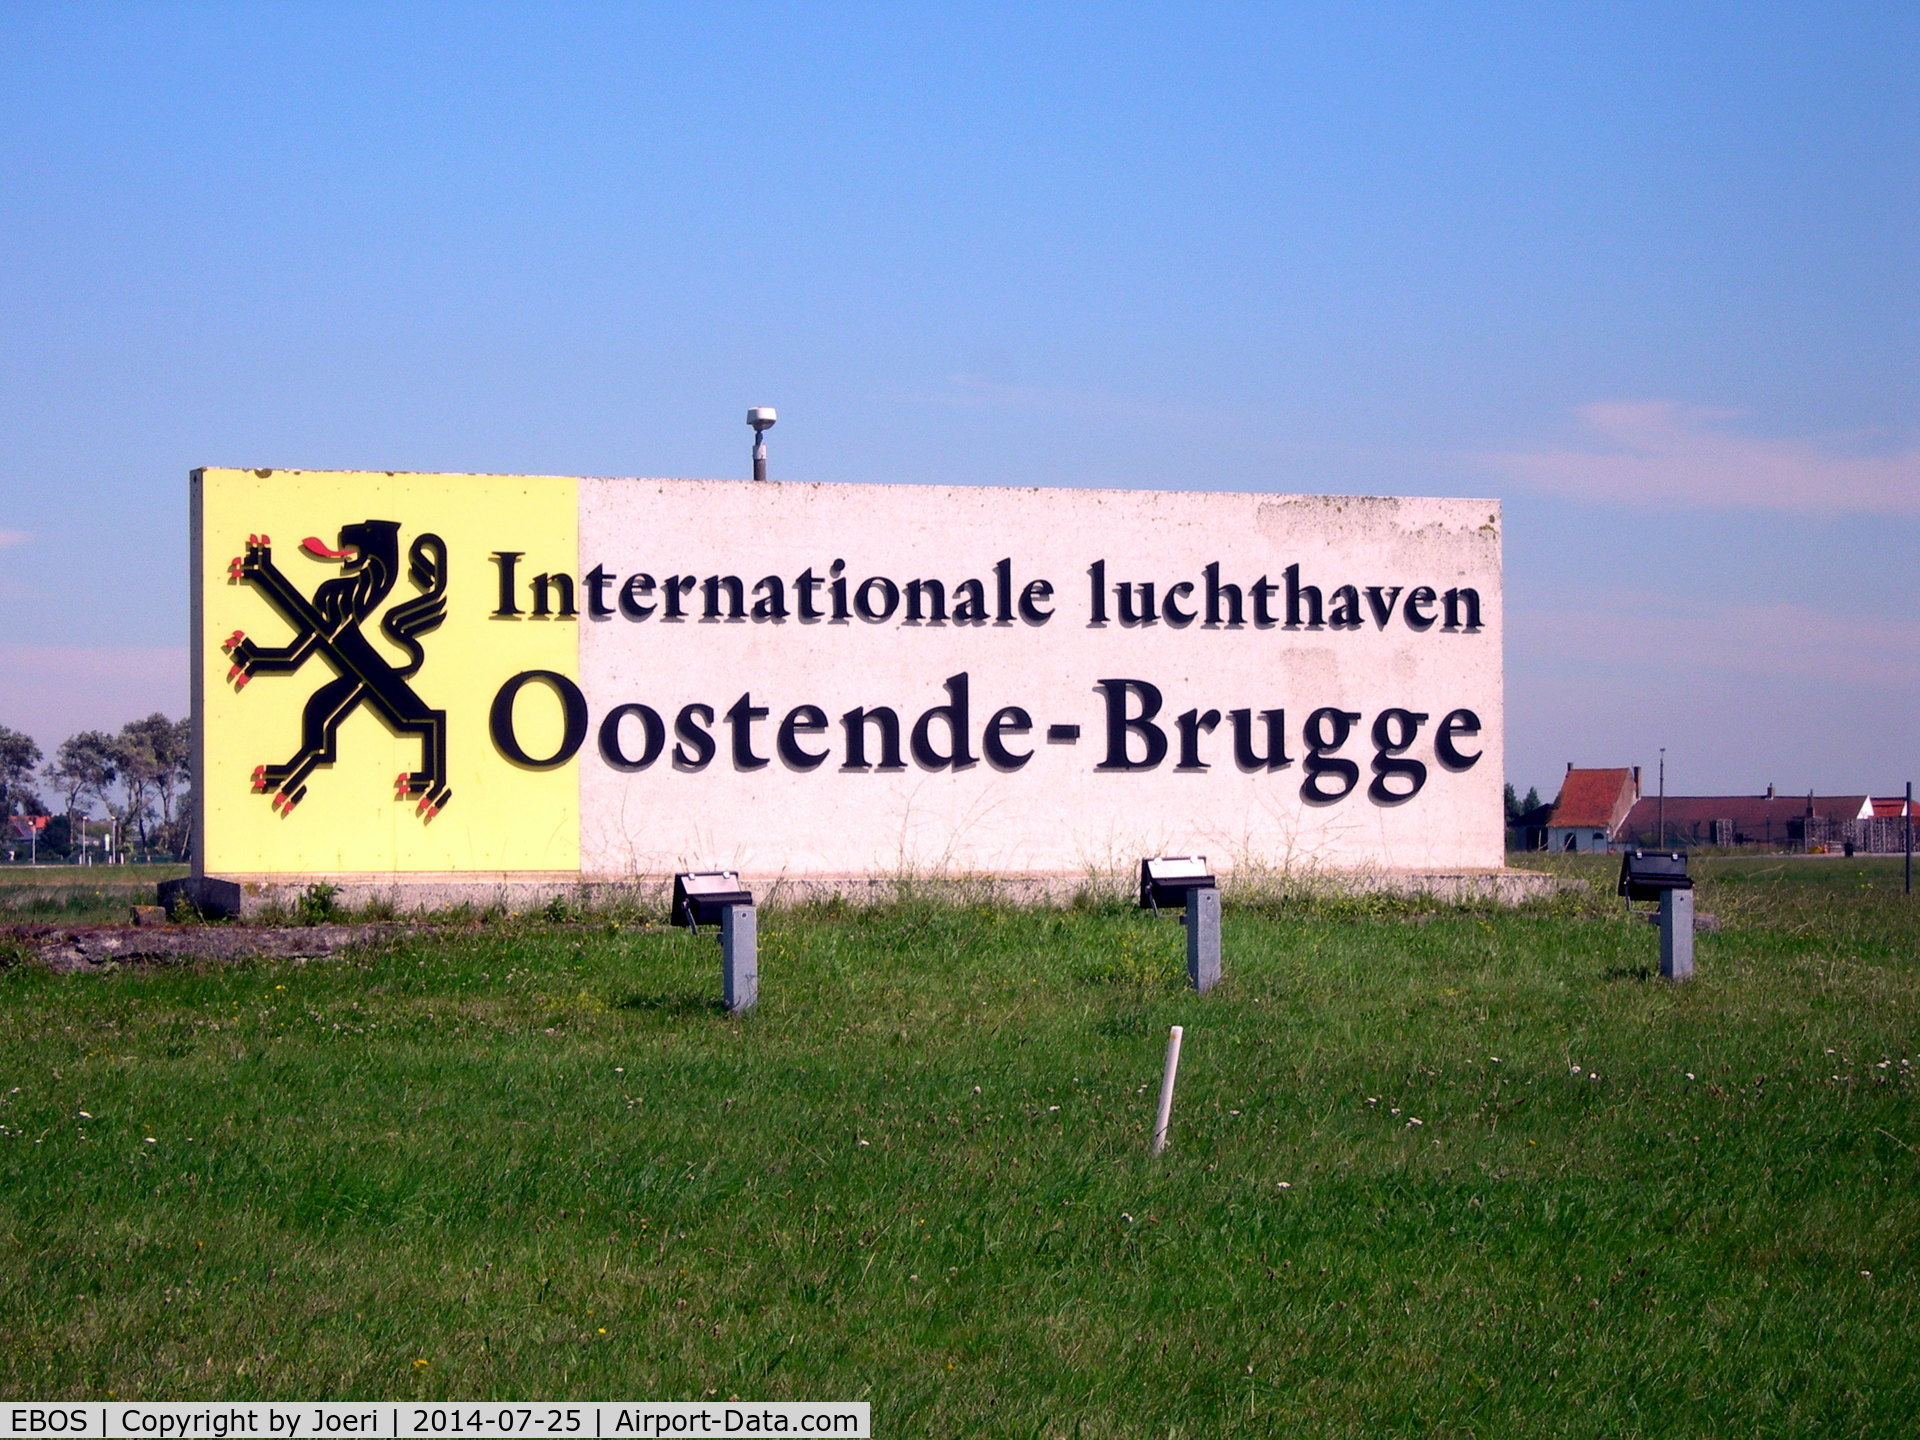 Ostend-Bruges International Airport, Ostend Belgium (EBOS) - Ostend Airport